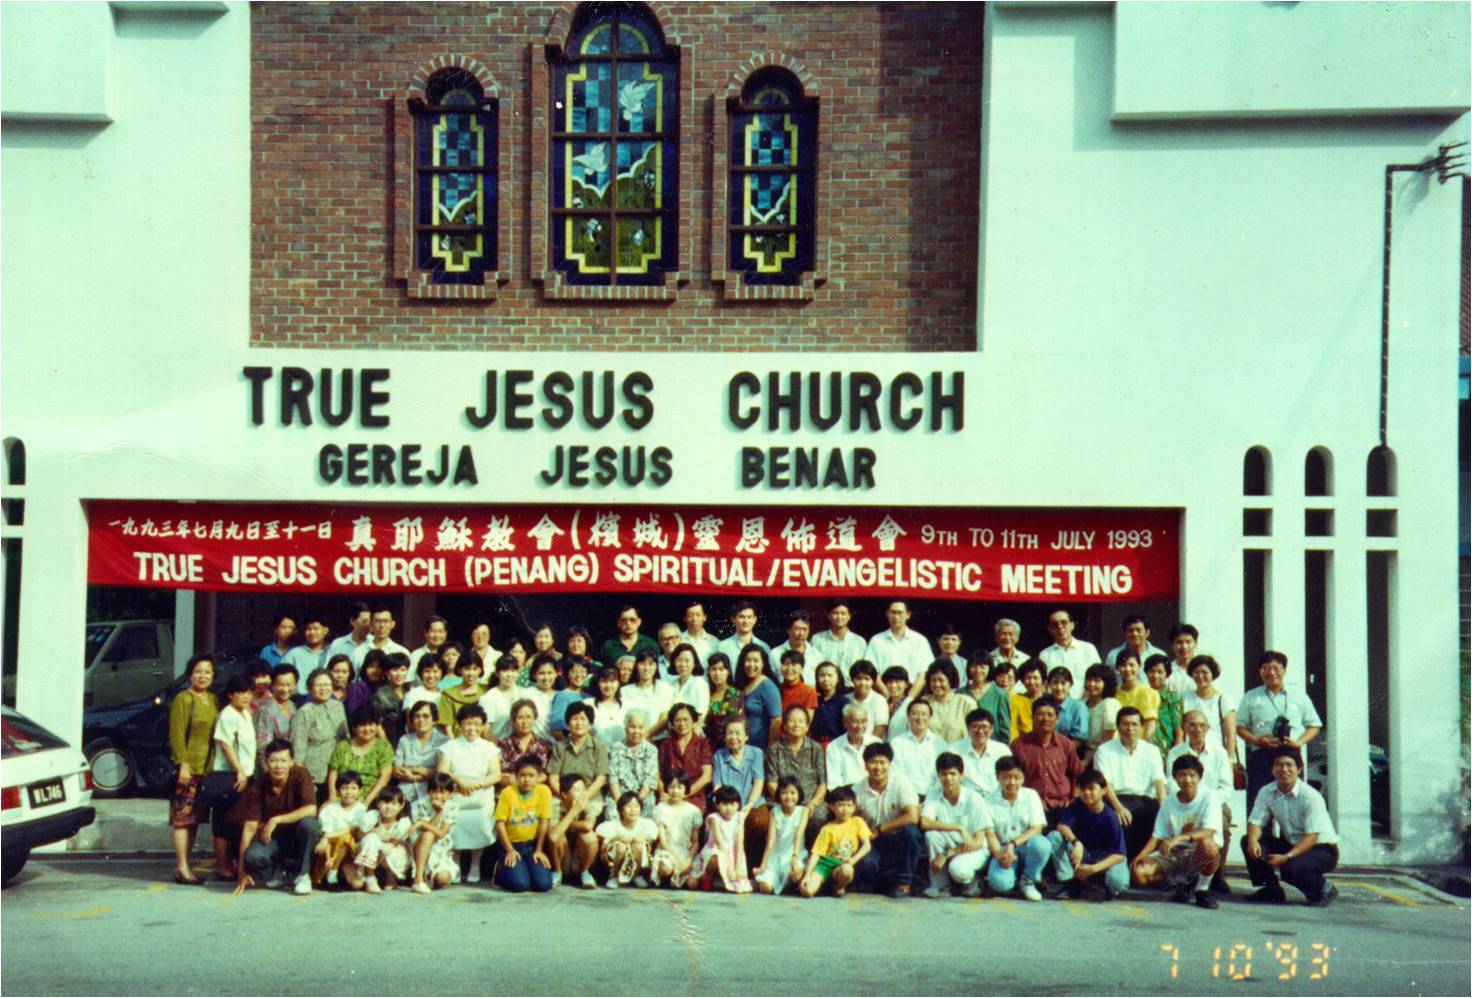 Spiritual Meeting and Evangelistic Meeting - Ayer Itam 槟城真耶稣教会灵恩布道会 9-11/07/1993